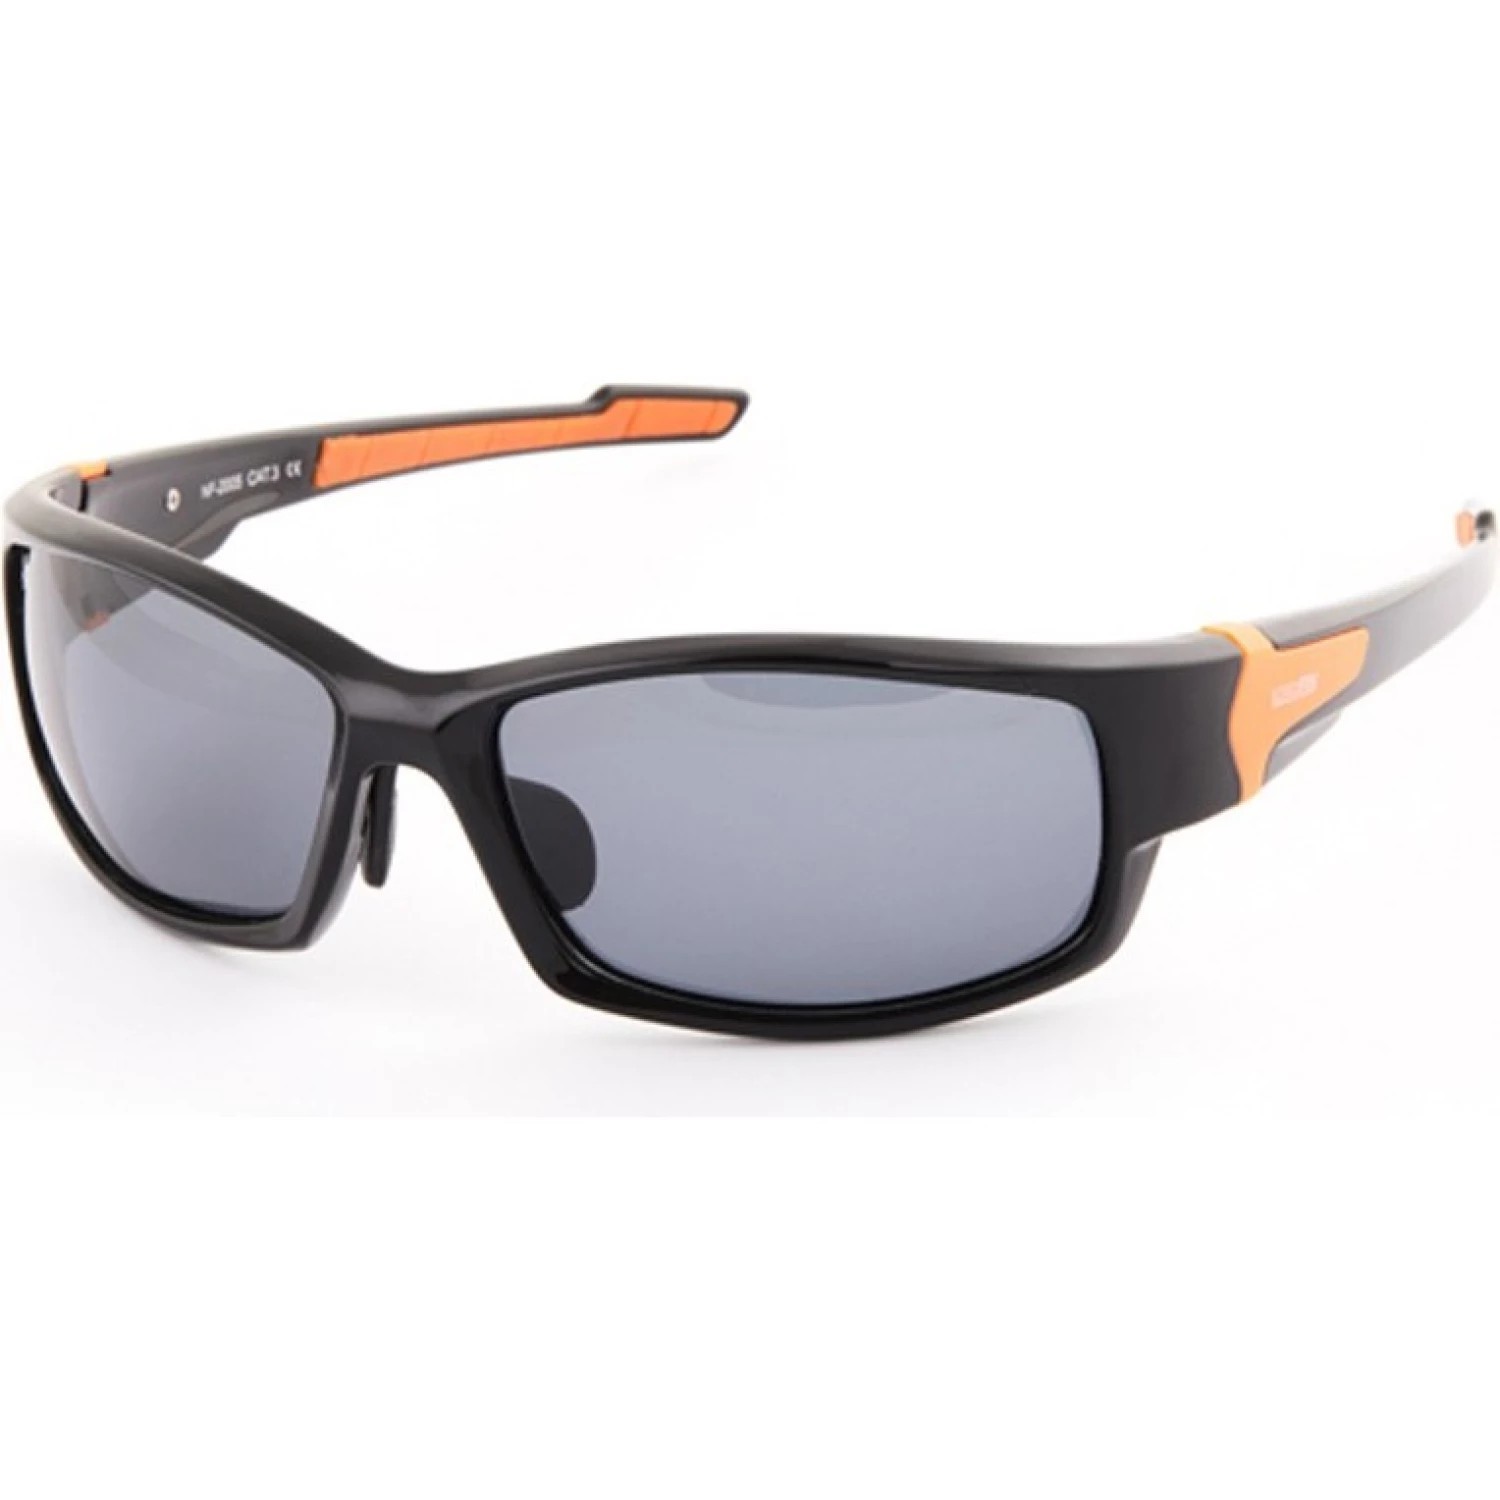 Очки Norfin Polarized sunglasses grey - фото 1